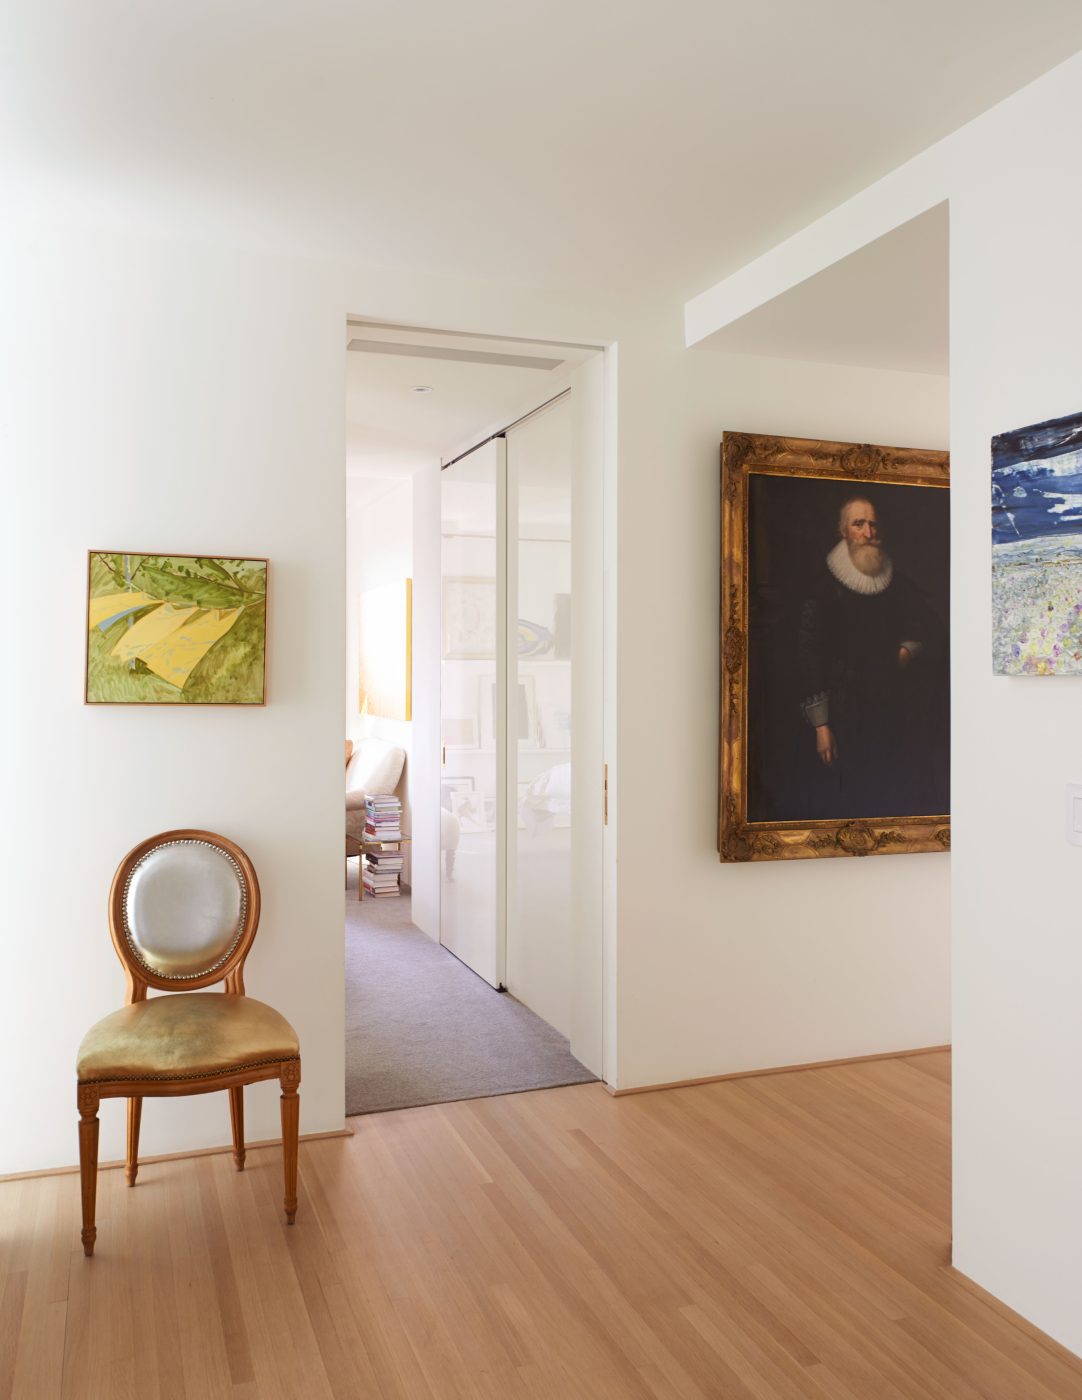 The hallway of Isaac Mizrahi's New York apartment